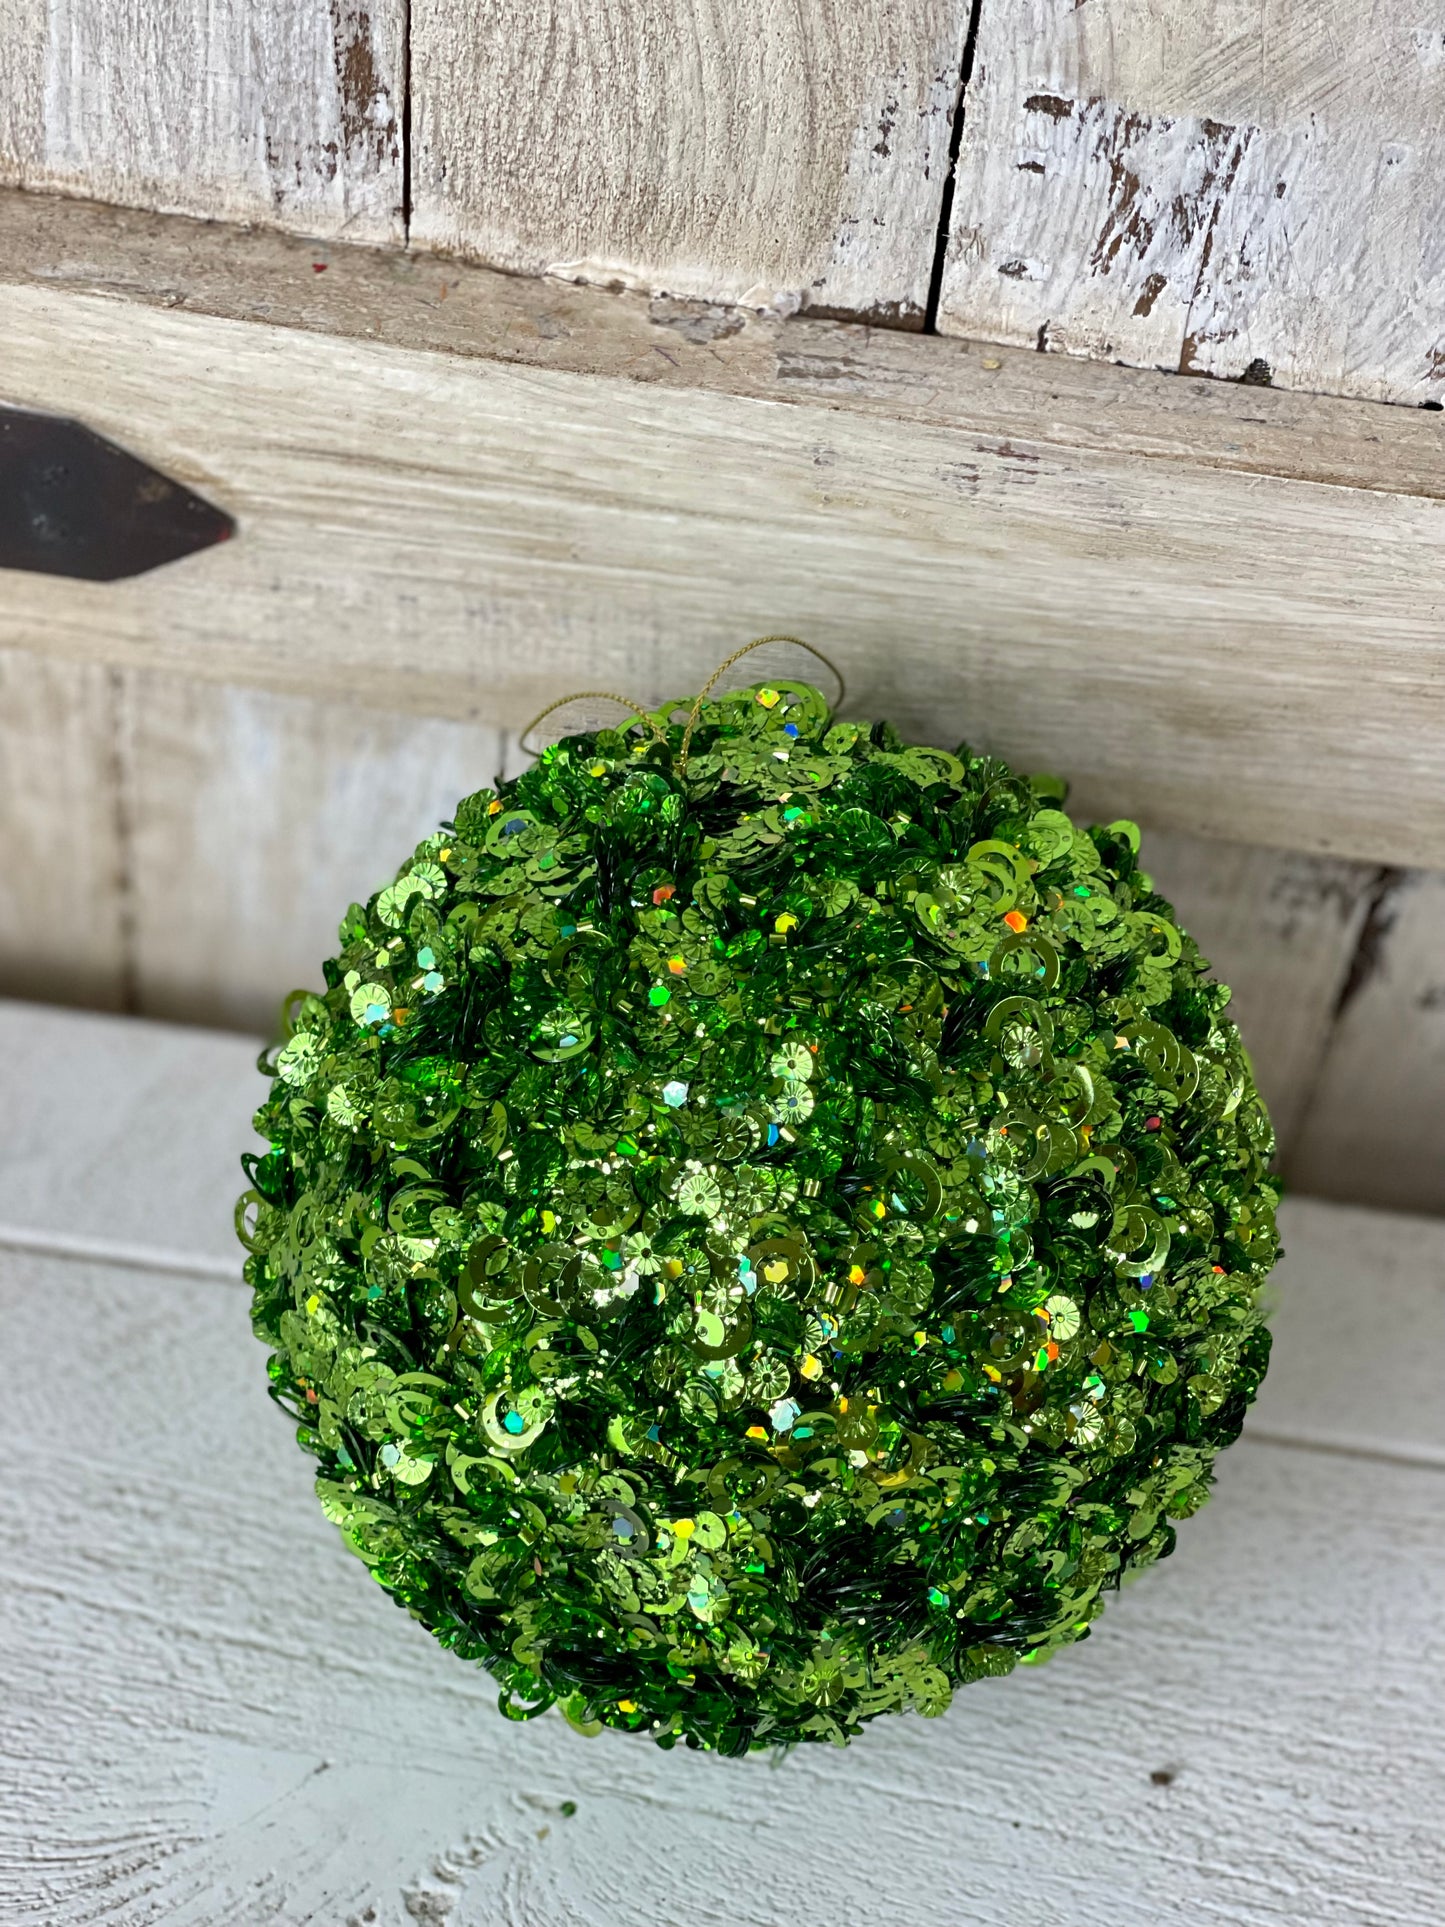 6 Inch Lime Green Sequin Glitter Ornament